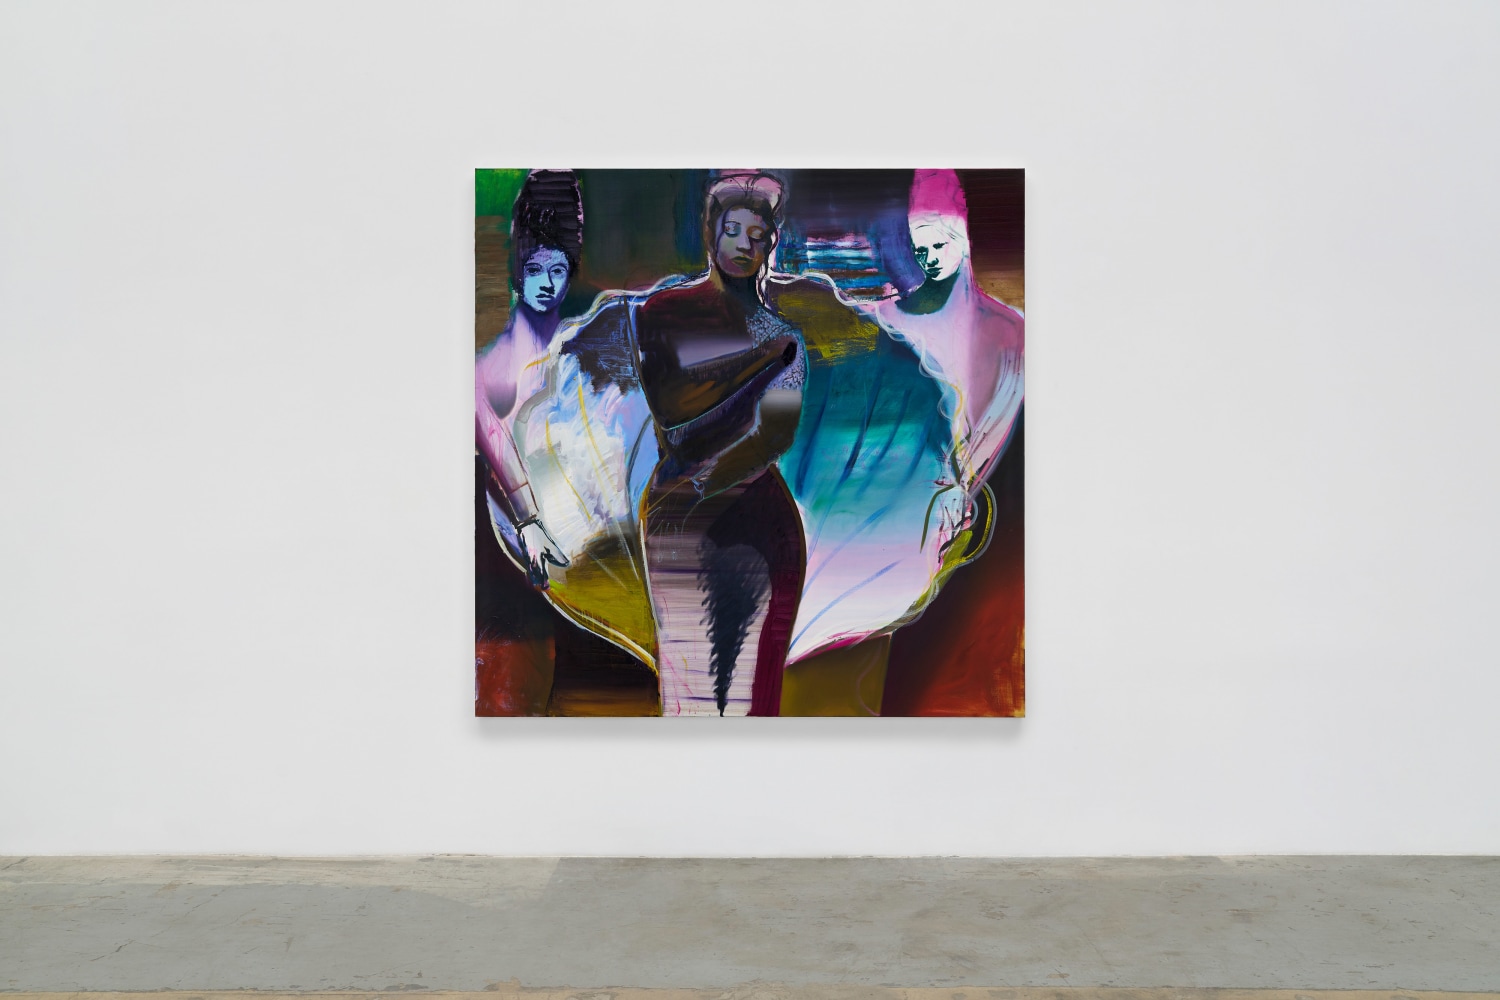 Katherina&amp;nbsp;Olschbaur
The Gift, 2021
oil on canvas
78.75 x 78.75 in
200 x 200 cm